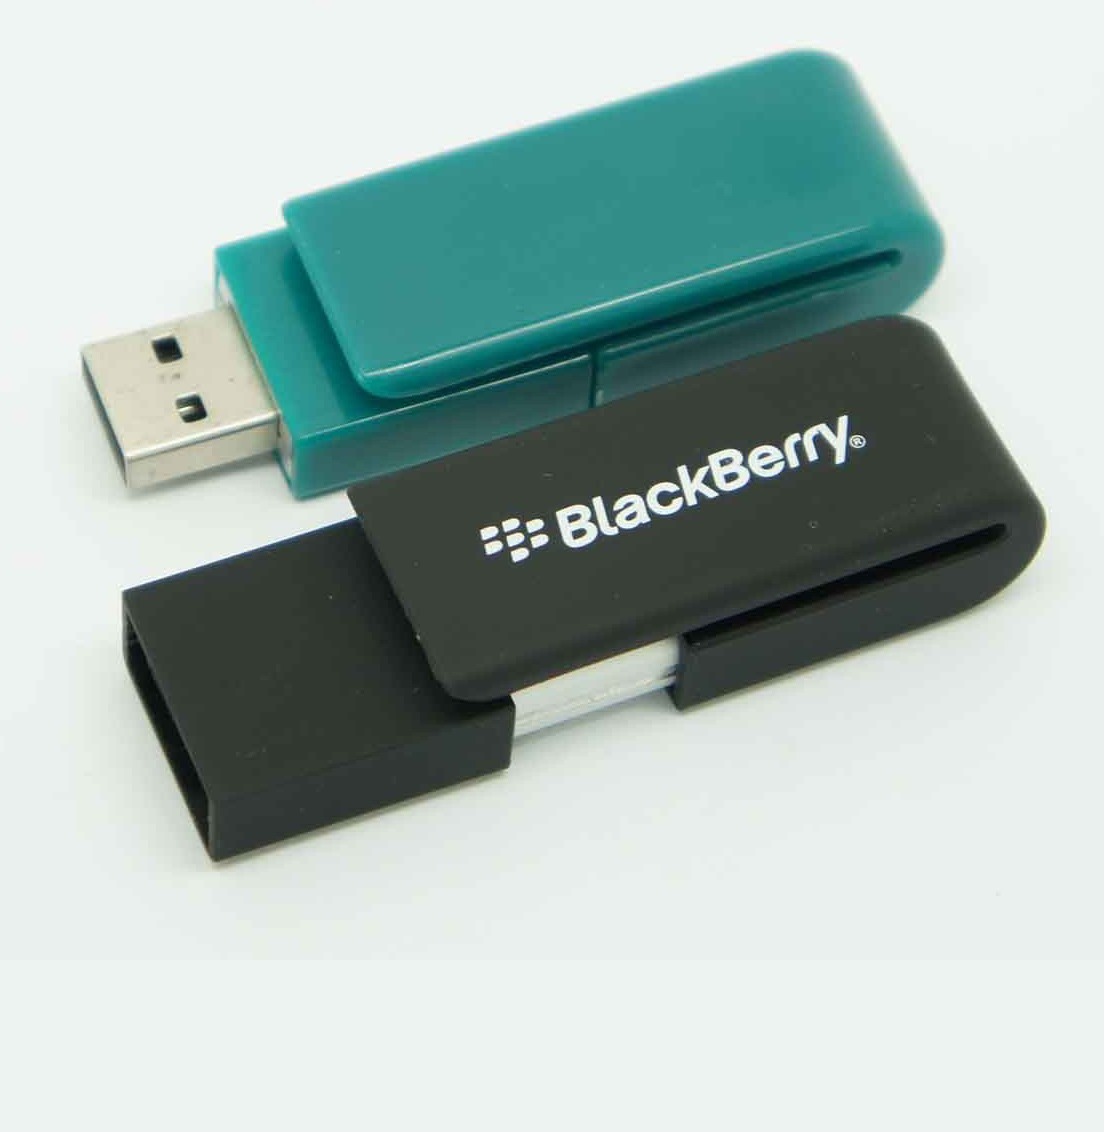 Plastic USB memory